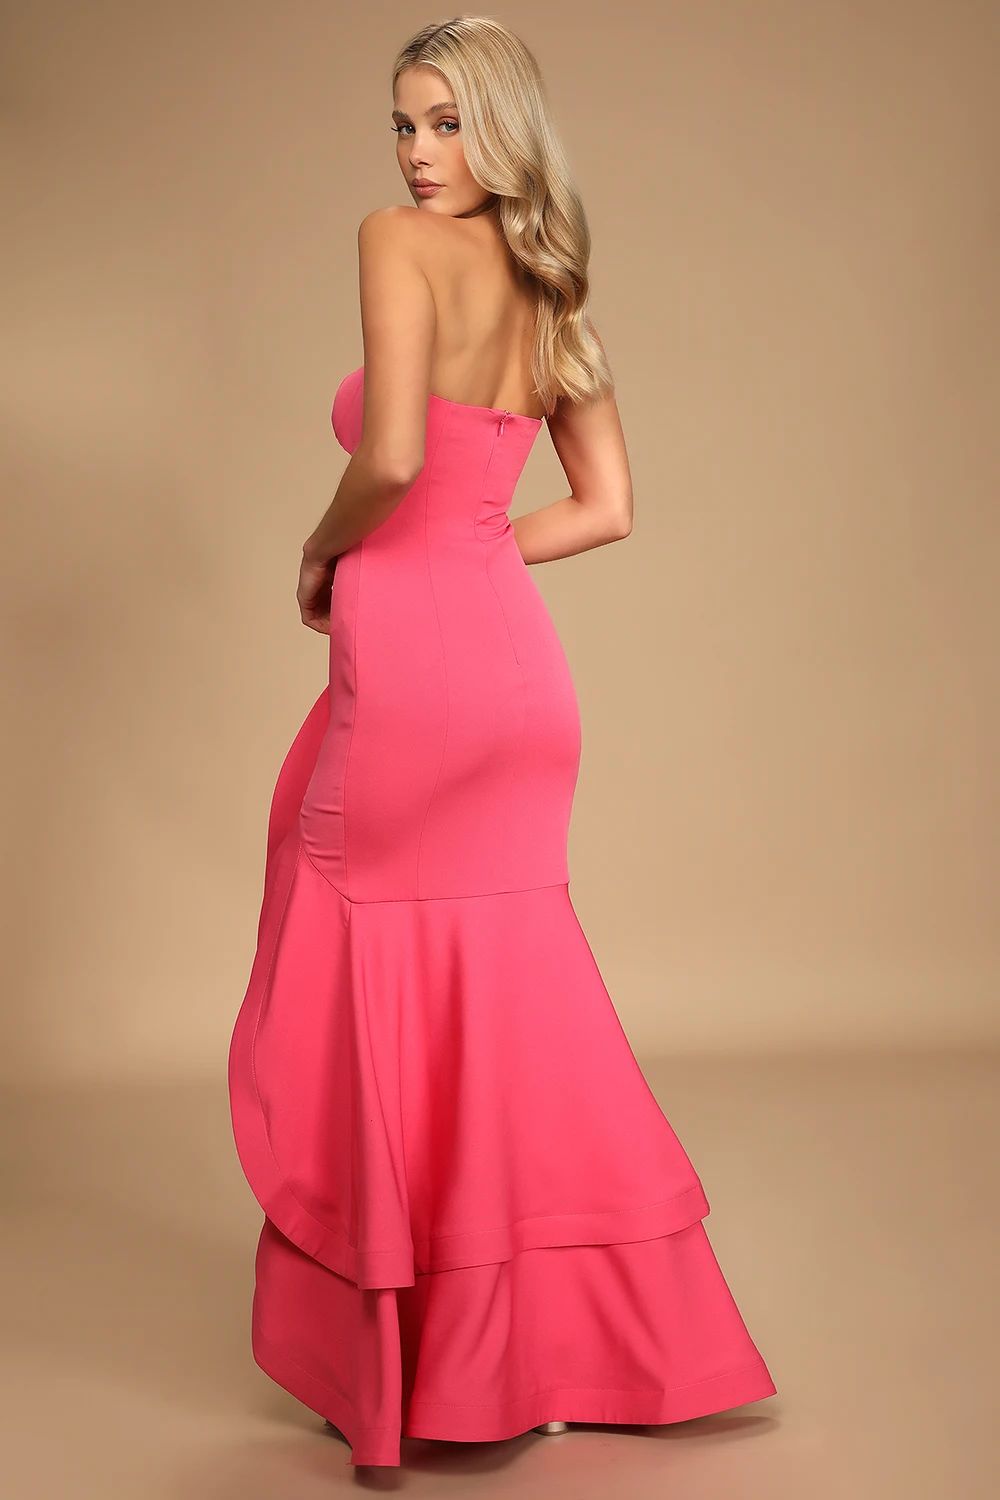 Fabulous Festivities Hot Pink Strapless Ruffled Trumpet Dress | Lulus (US)